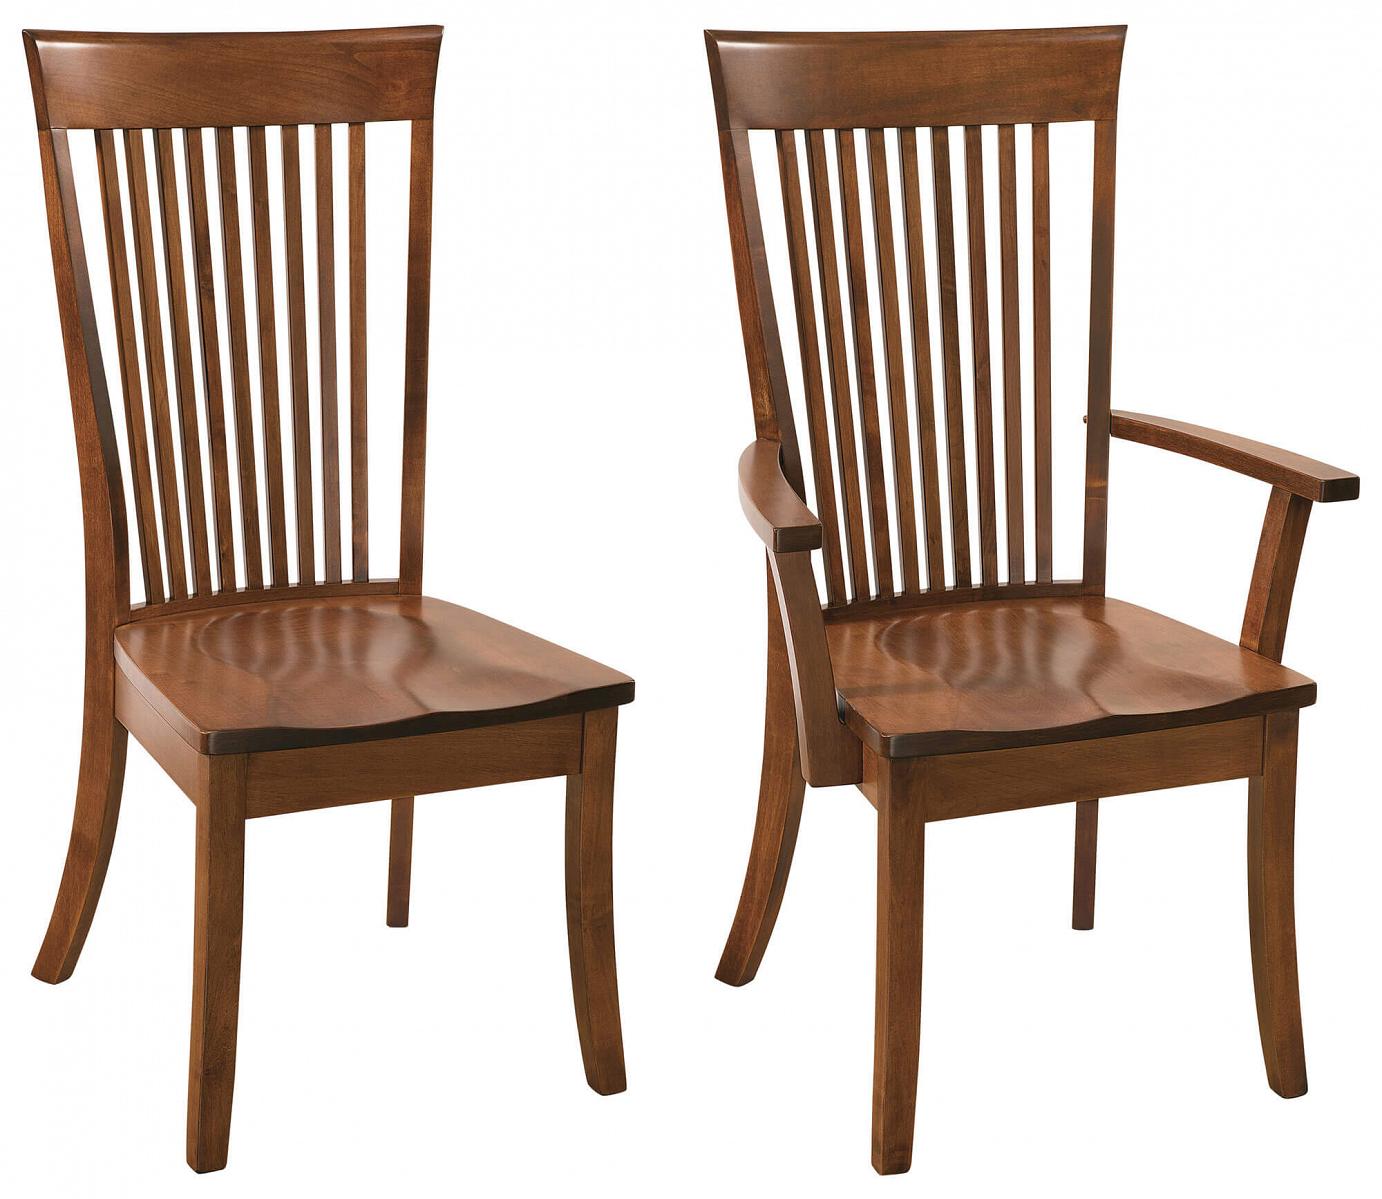 RH Yoder Katana Chairs